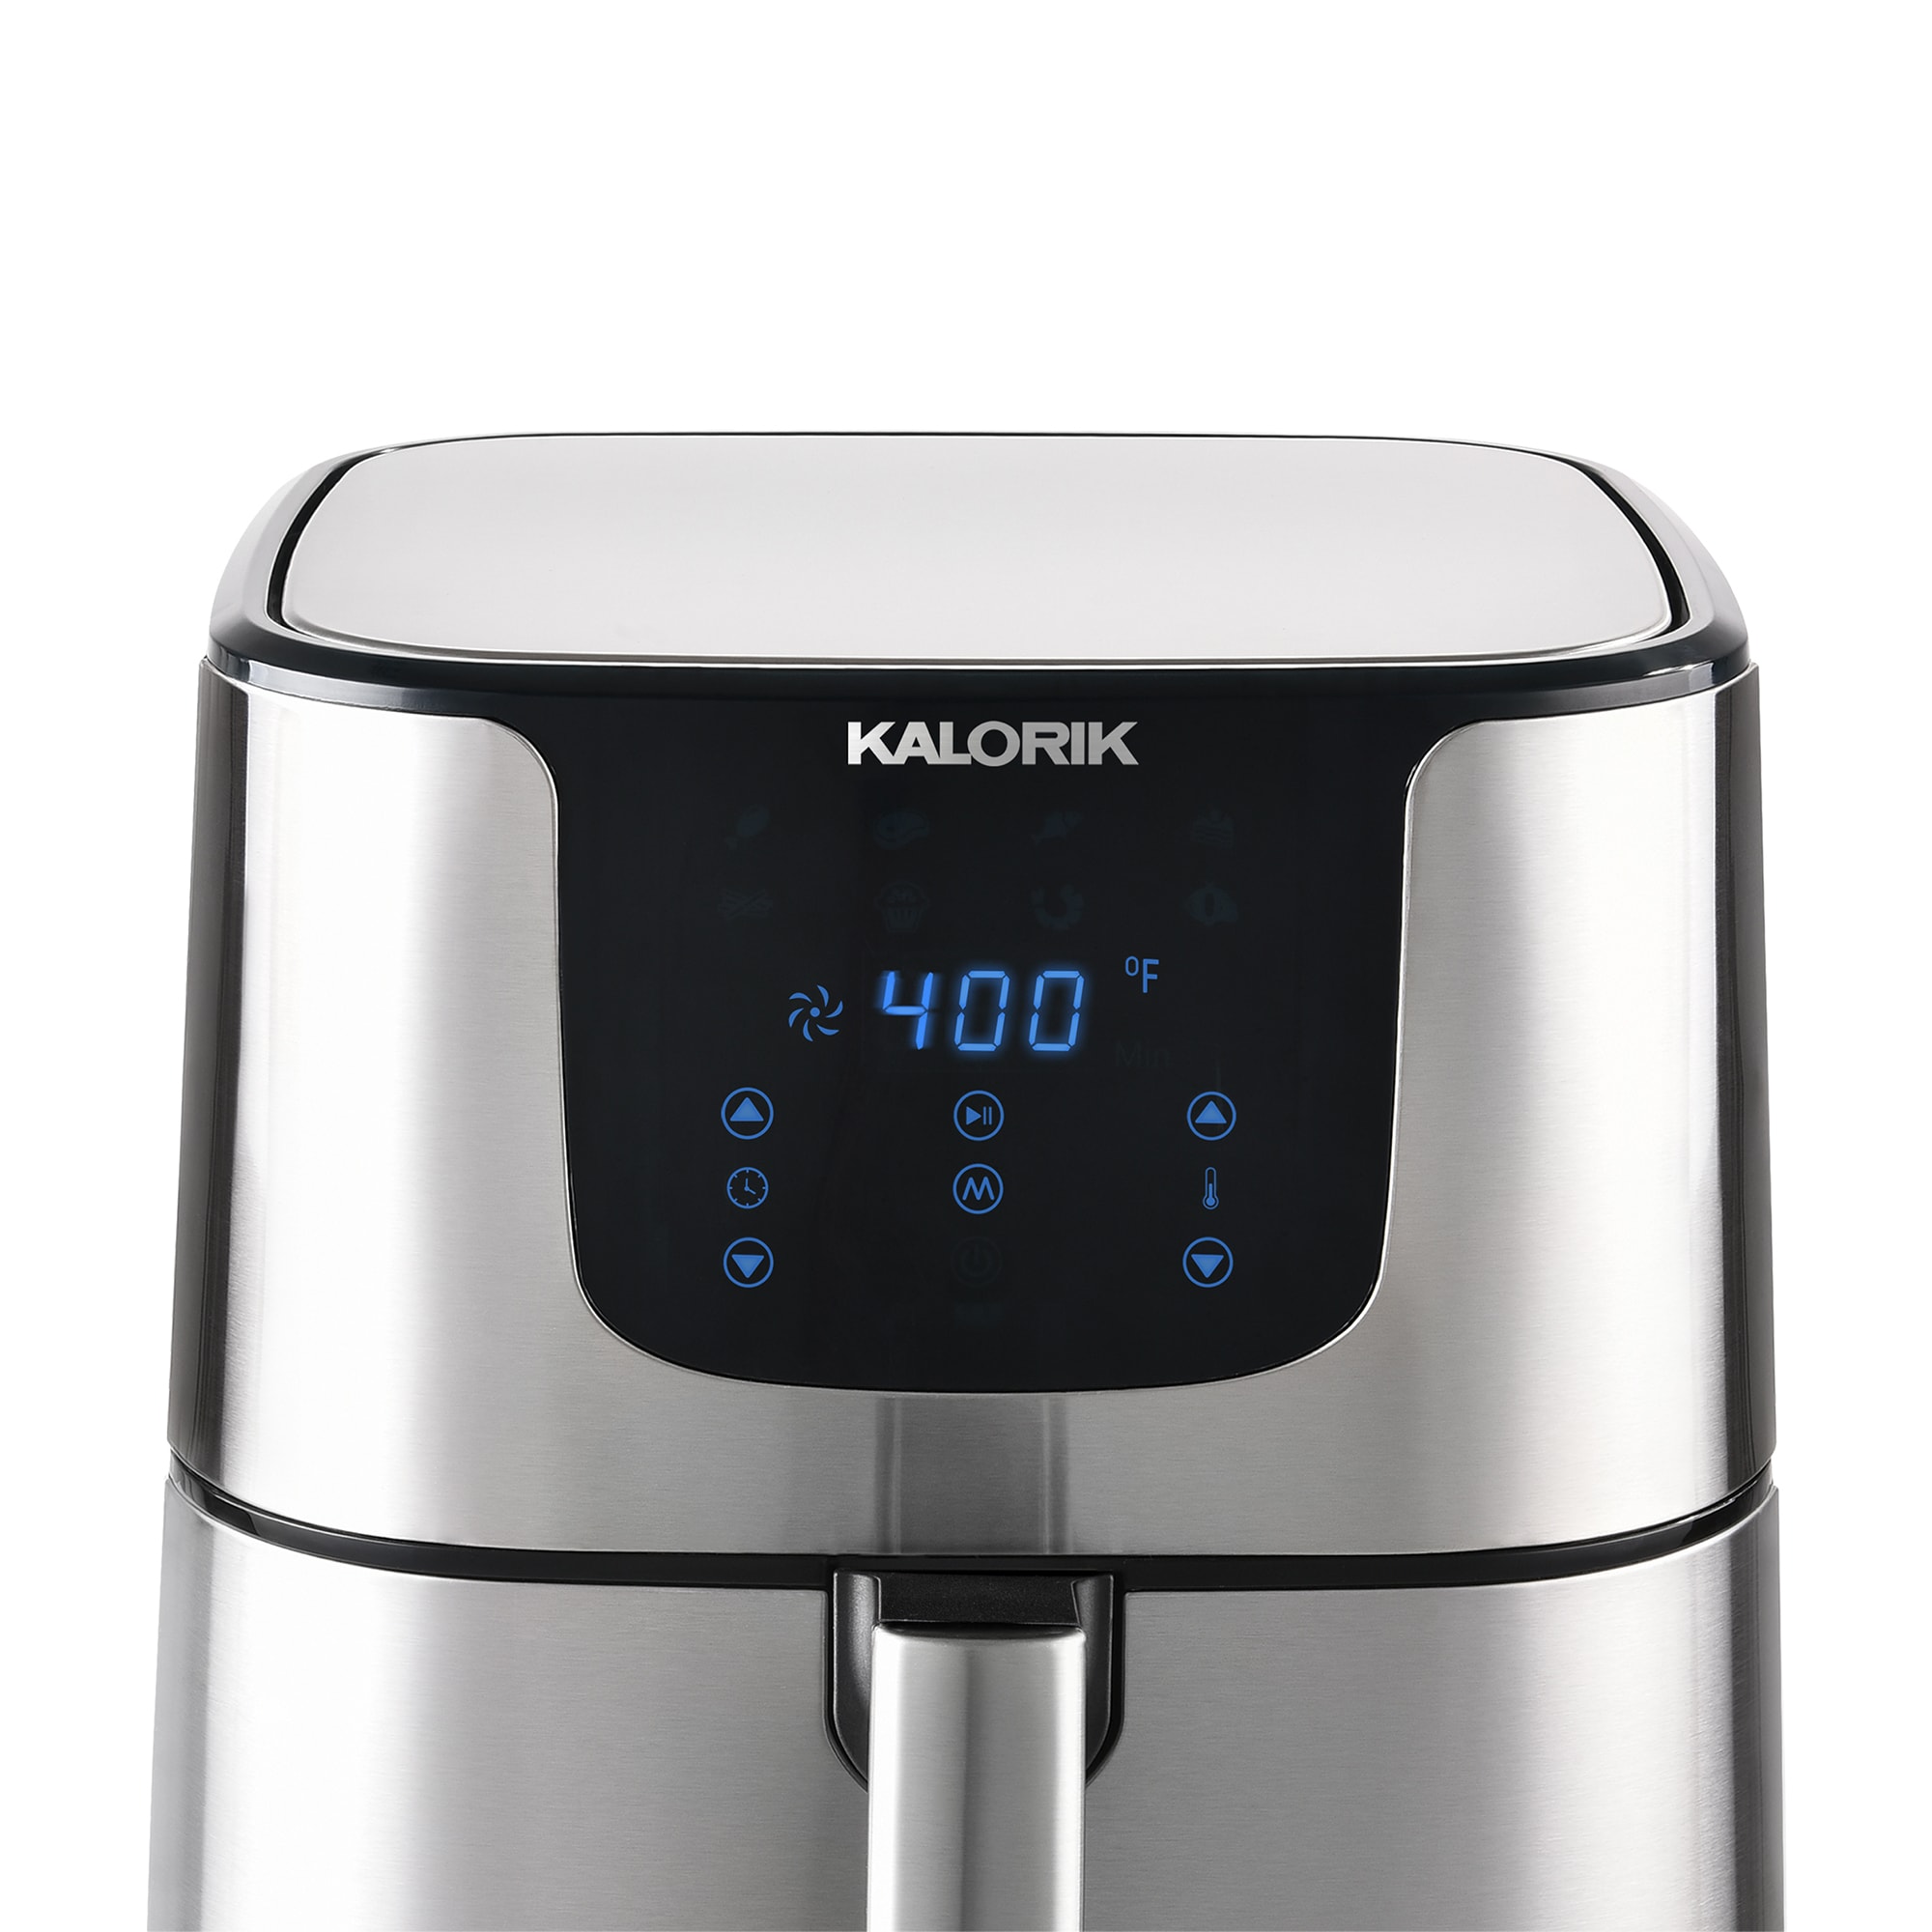 Kalorik 6-Quart Stainless Steel Air Fryer in the Air Fryers department at